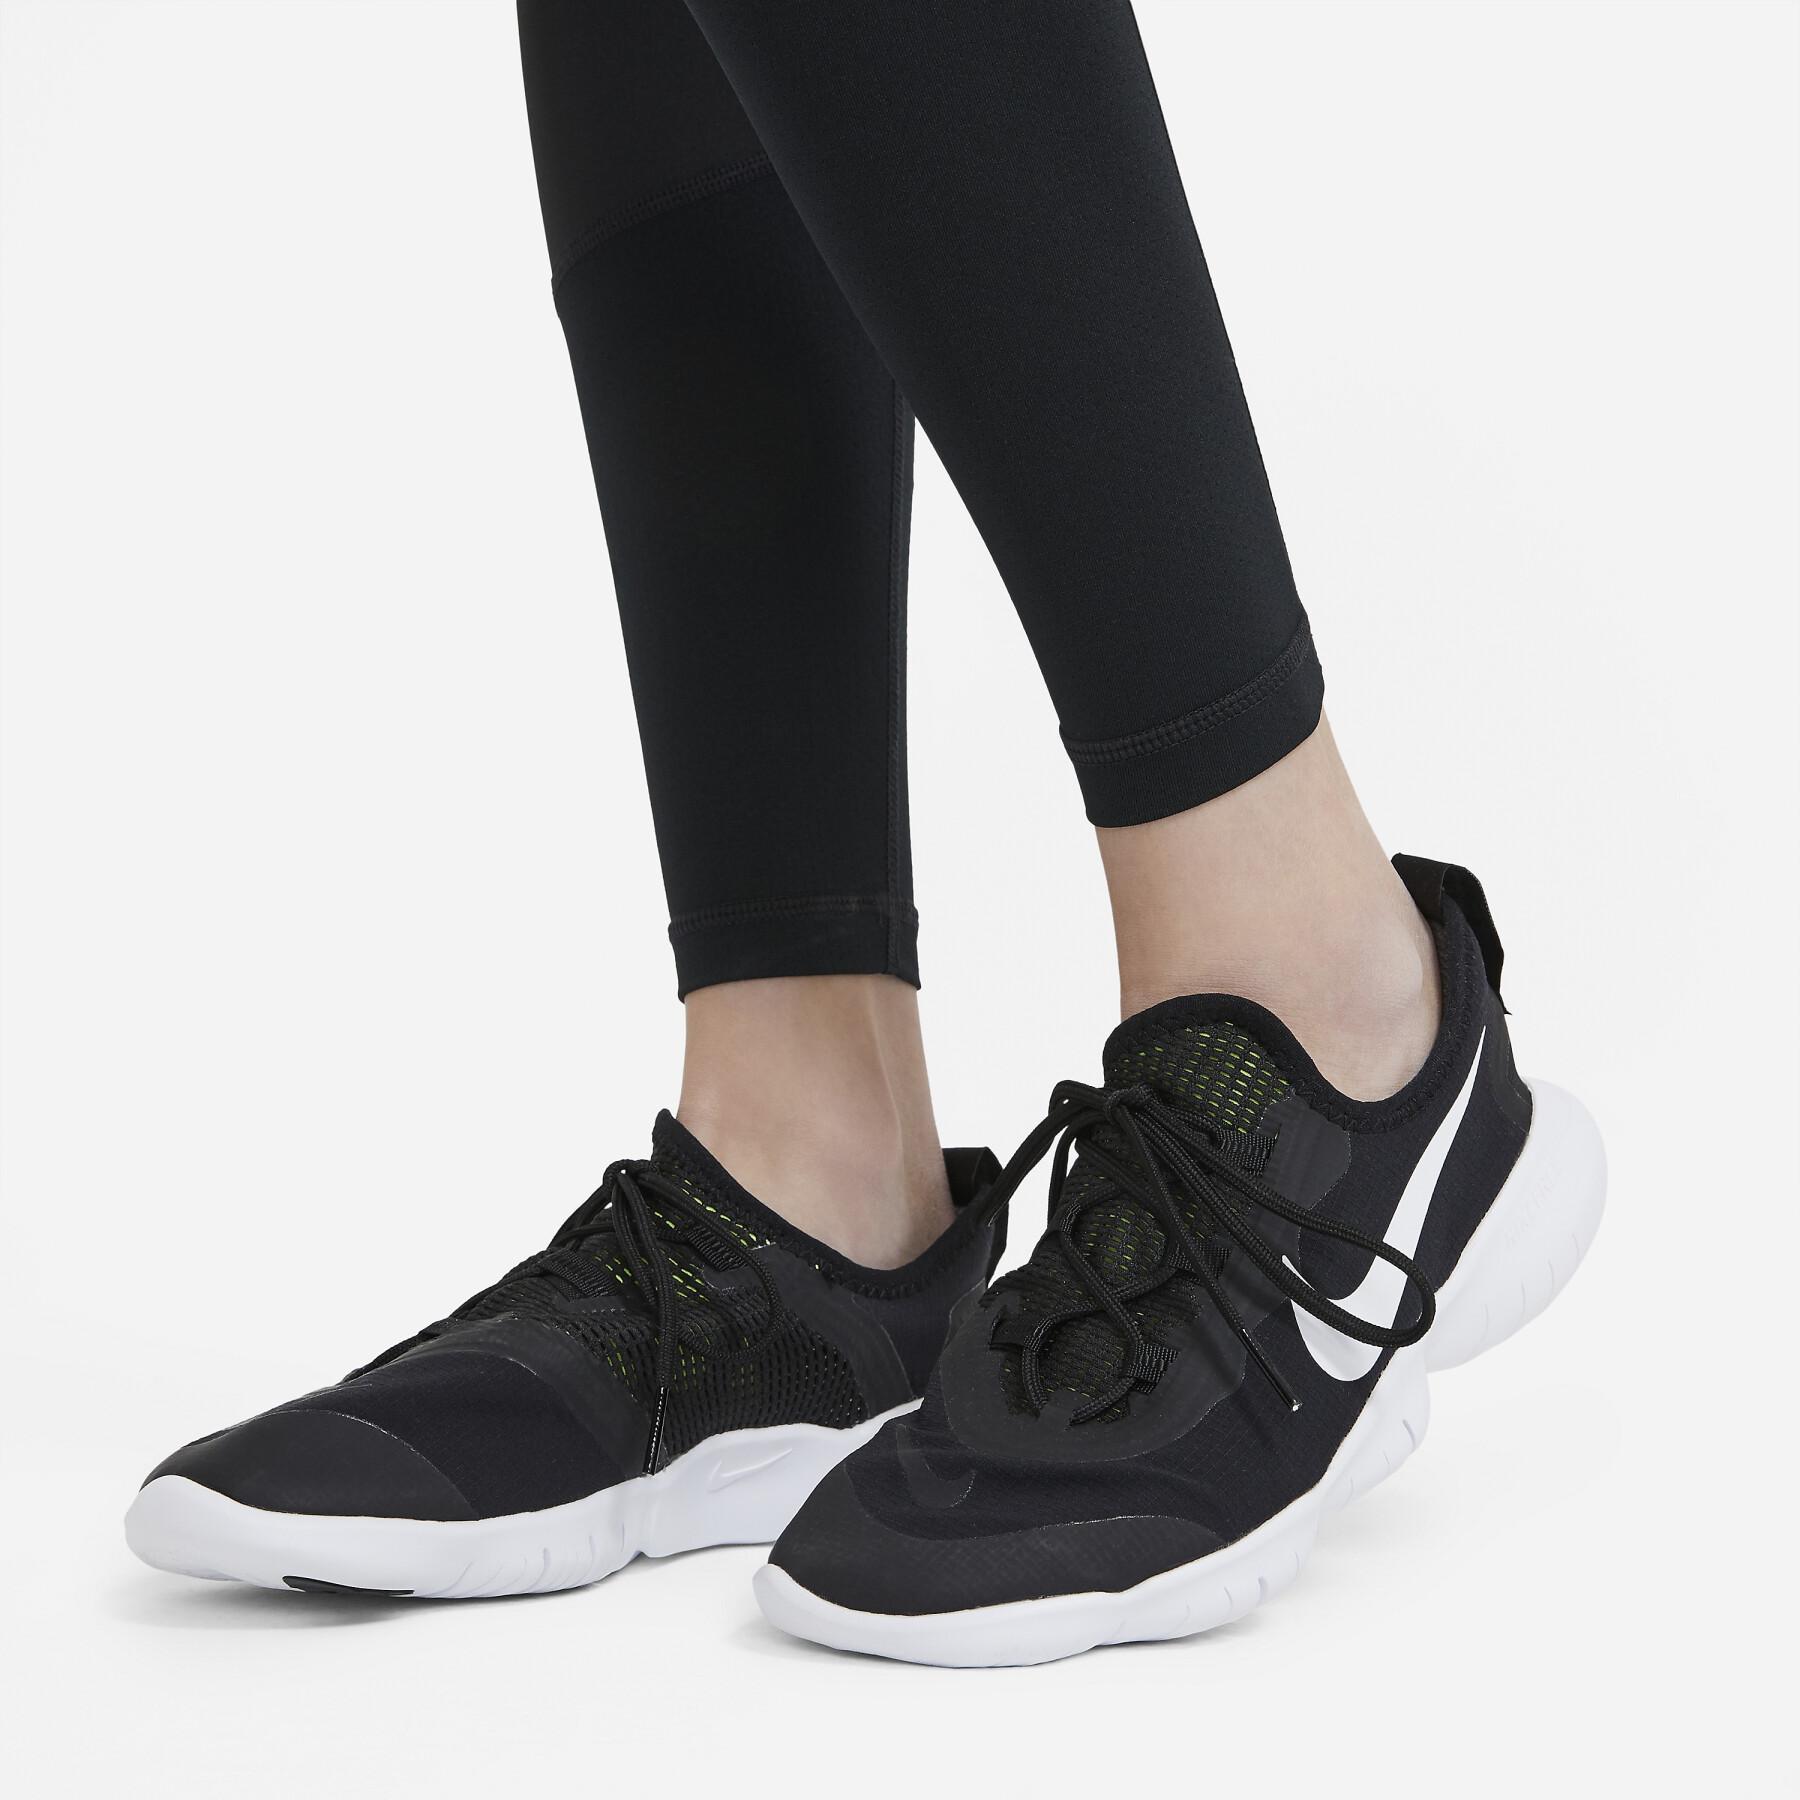 Legging fille Nike Pro